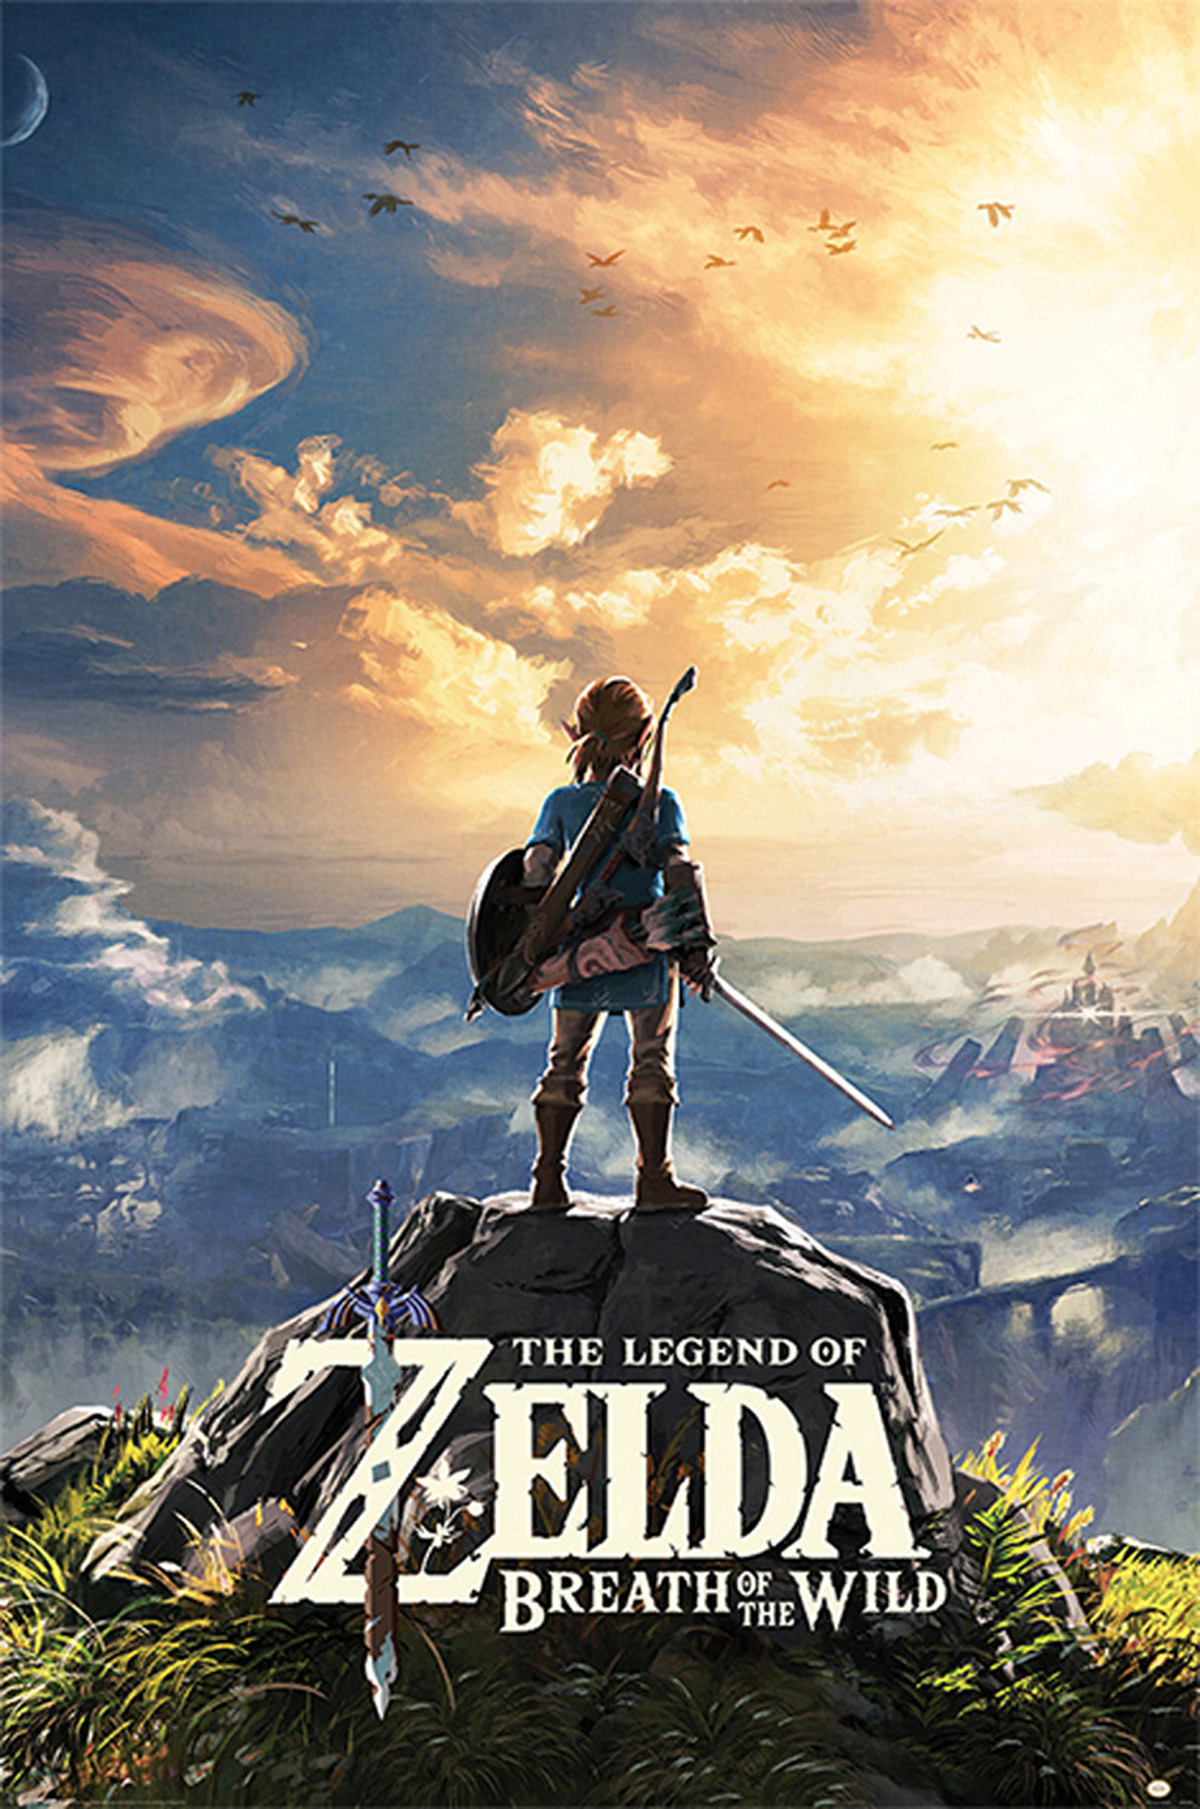 - Sunset of Zelda, the of - The Breath Wild Legend